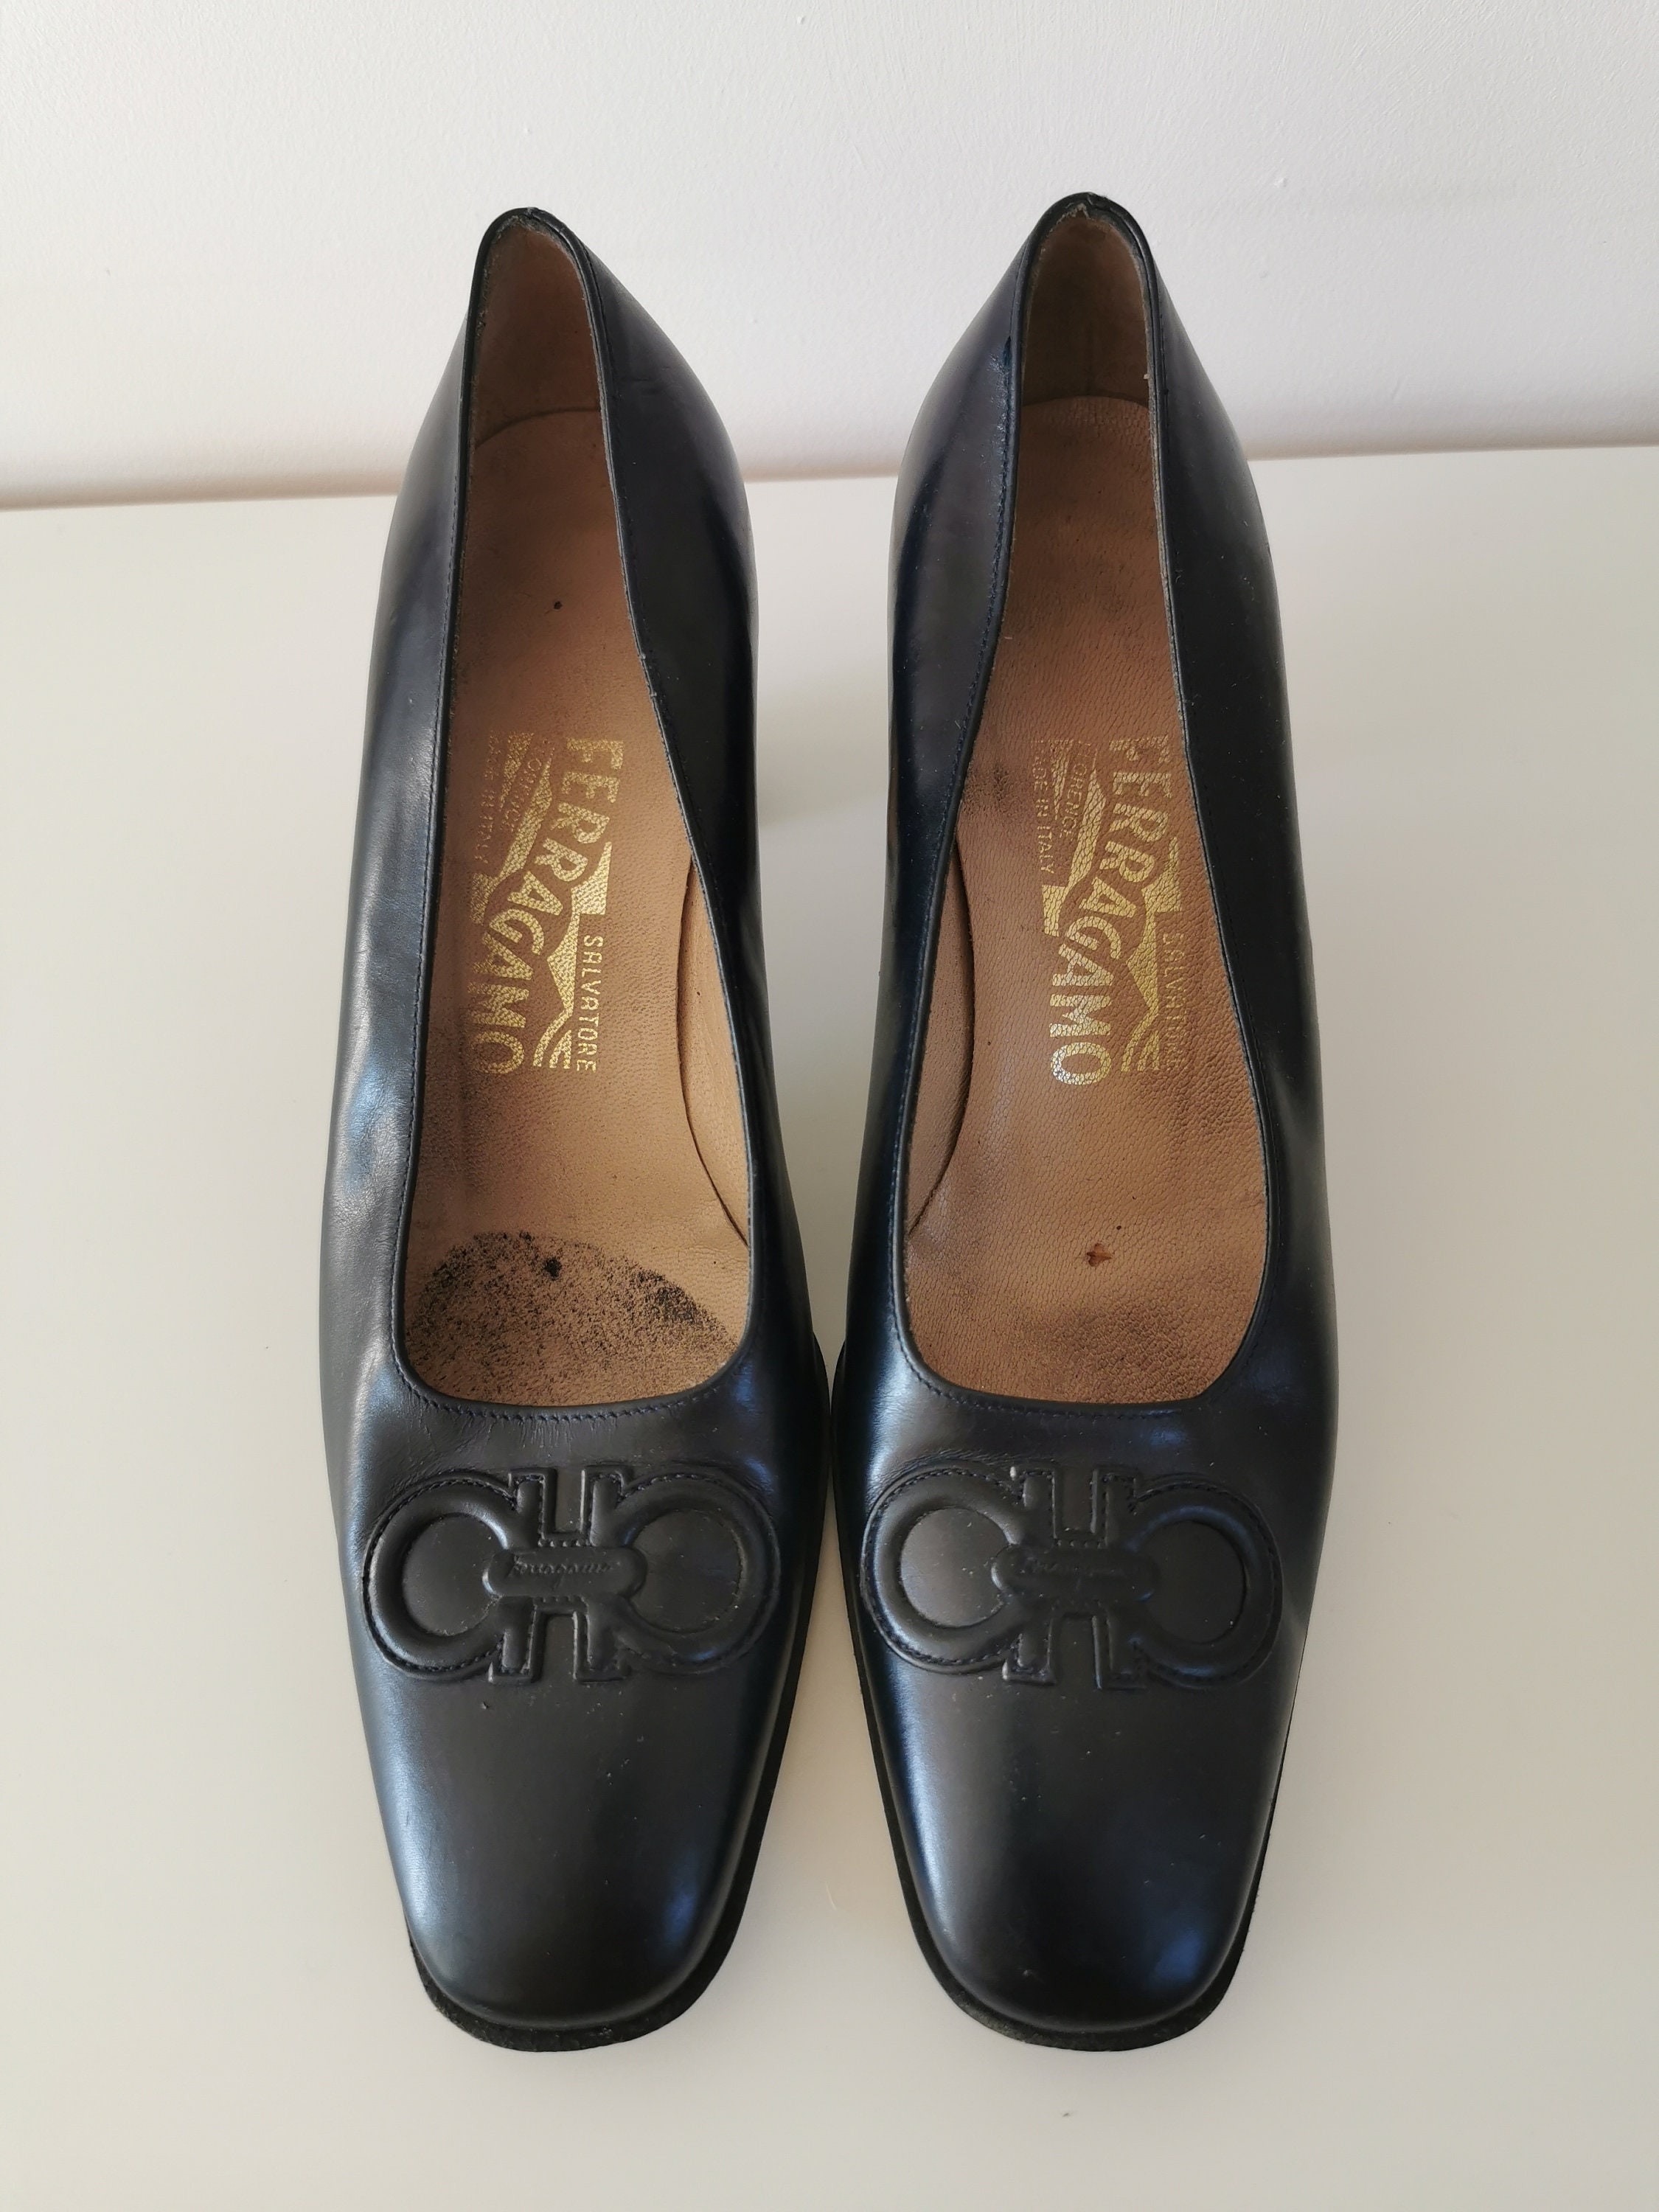 Vintage Ferragamo Court Shoes Size 7.5 B Regular | Etsy